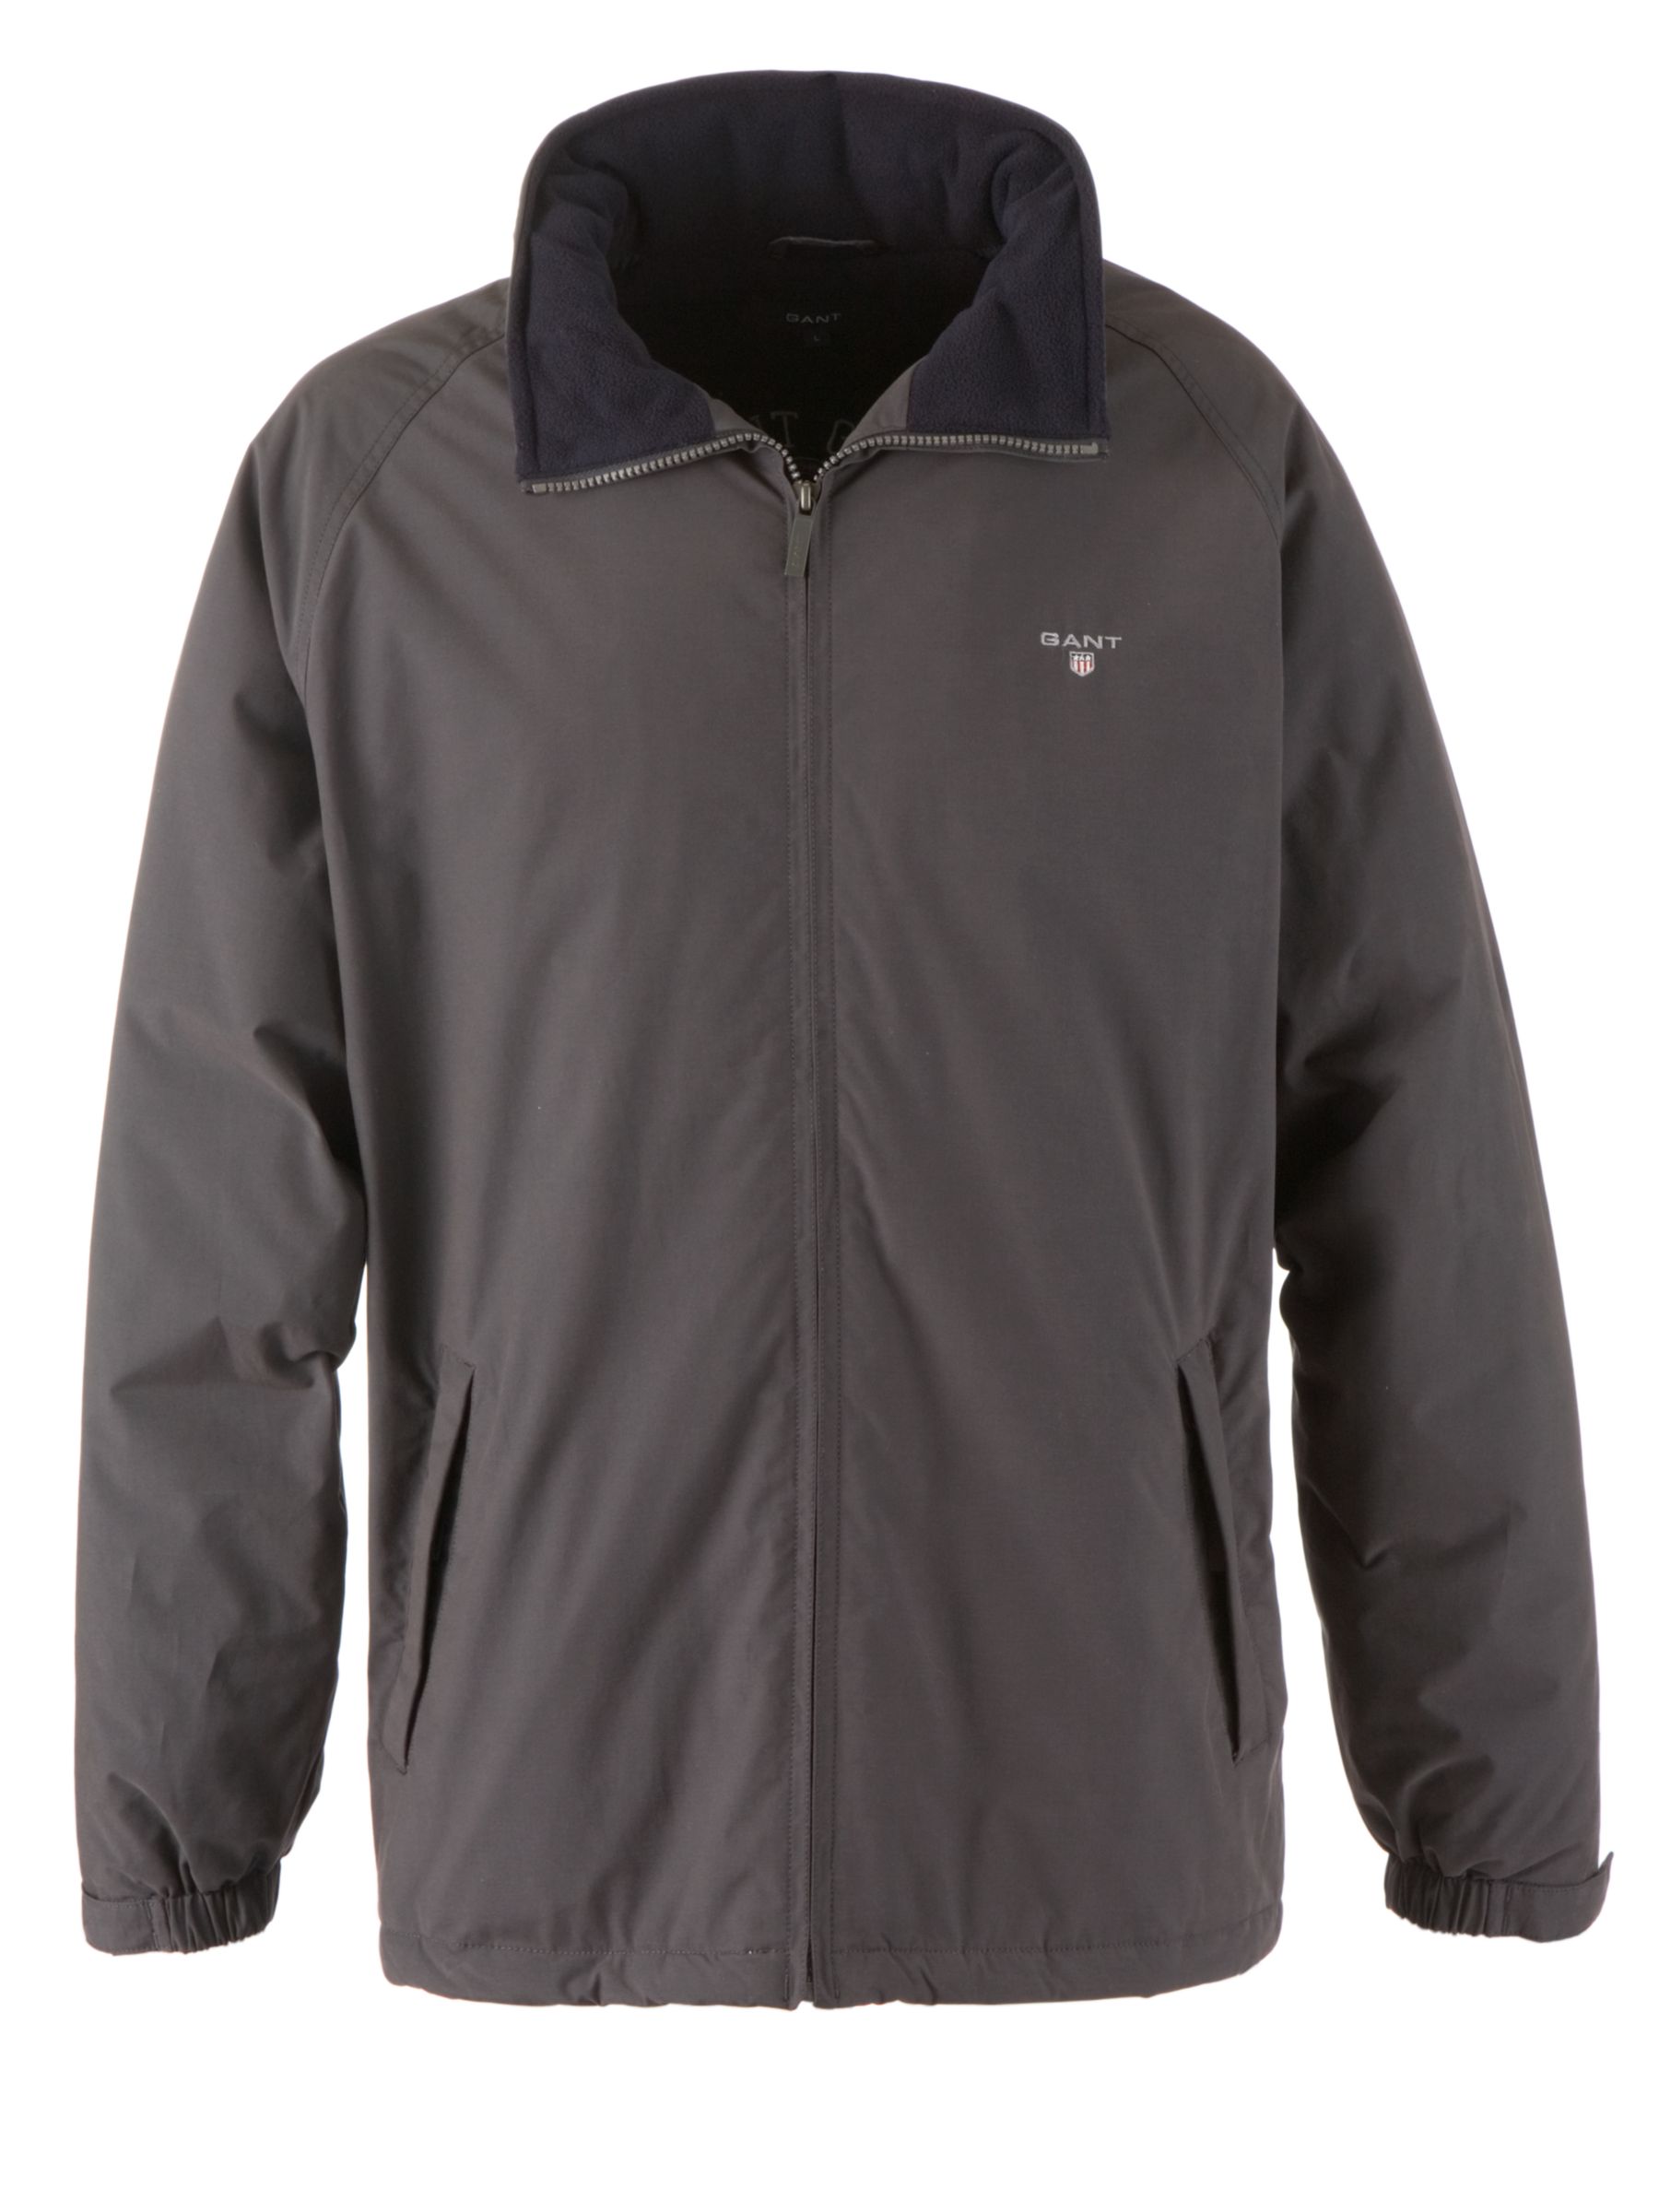 Gant Cotton Midlength Jacket, Charcoal at John Lewis